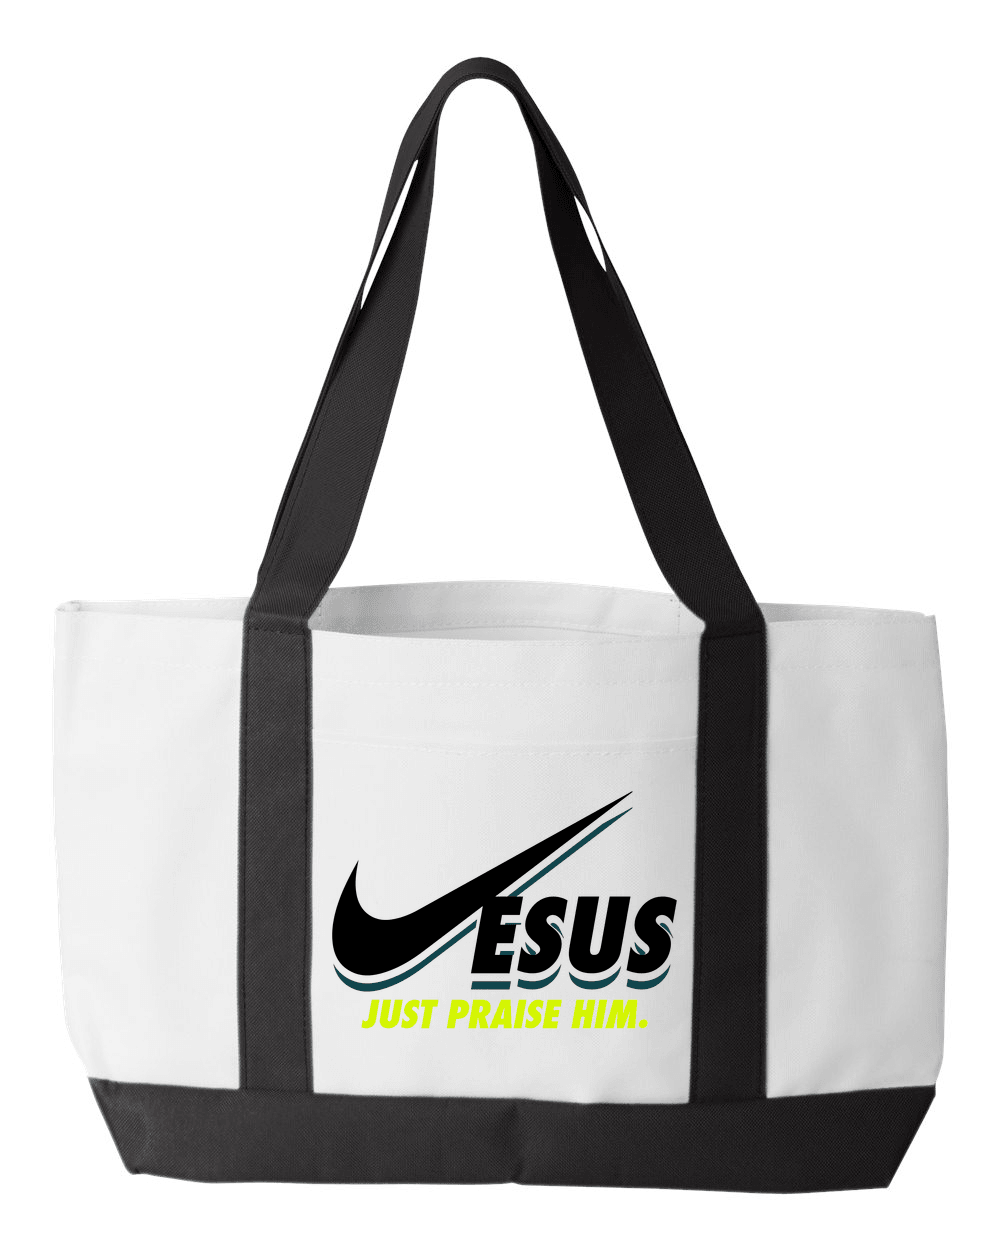 Designs by MyUtopia Shout Out:Jesus Just Praise Him Canvas Totebag Gym / Beach / Pool Gear Bag,Default Title,Gym Totebag